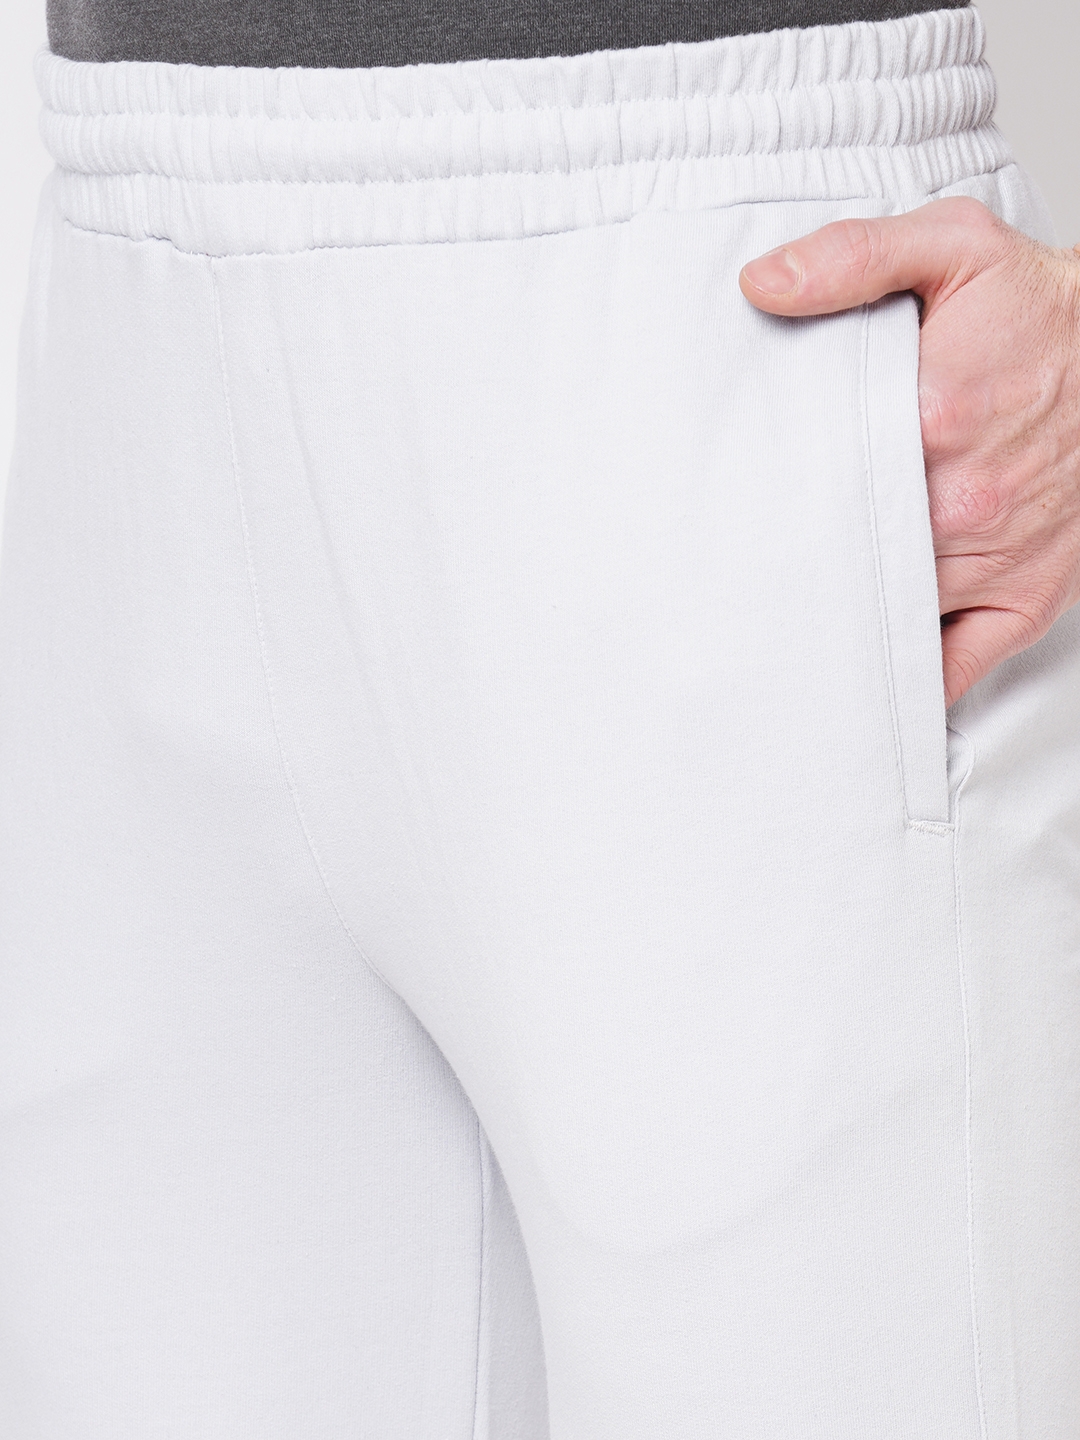 Men's Slim Fit Grey Cotton Blend Casual Joogers